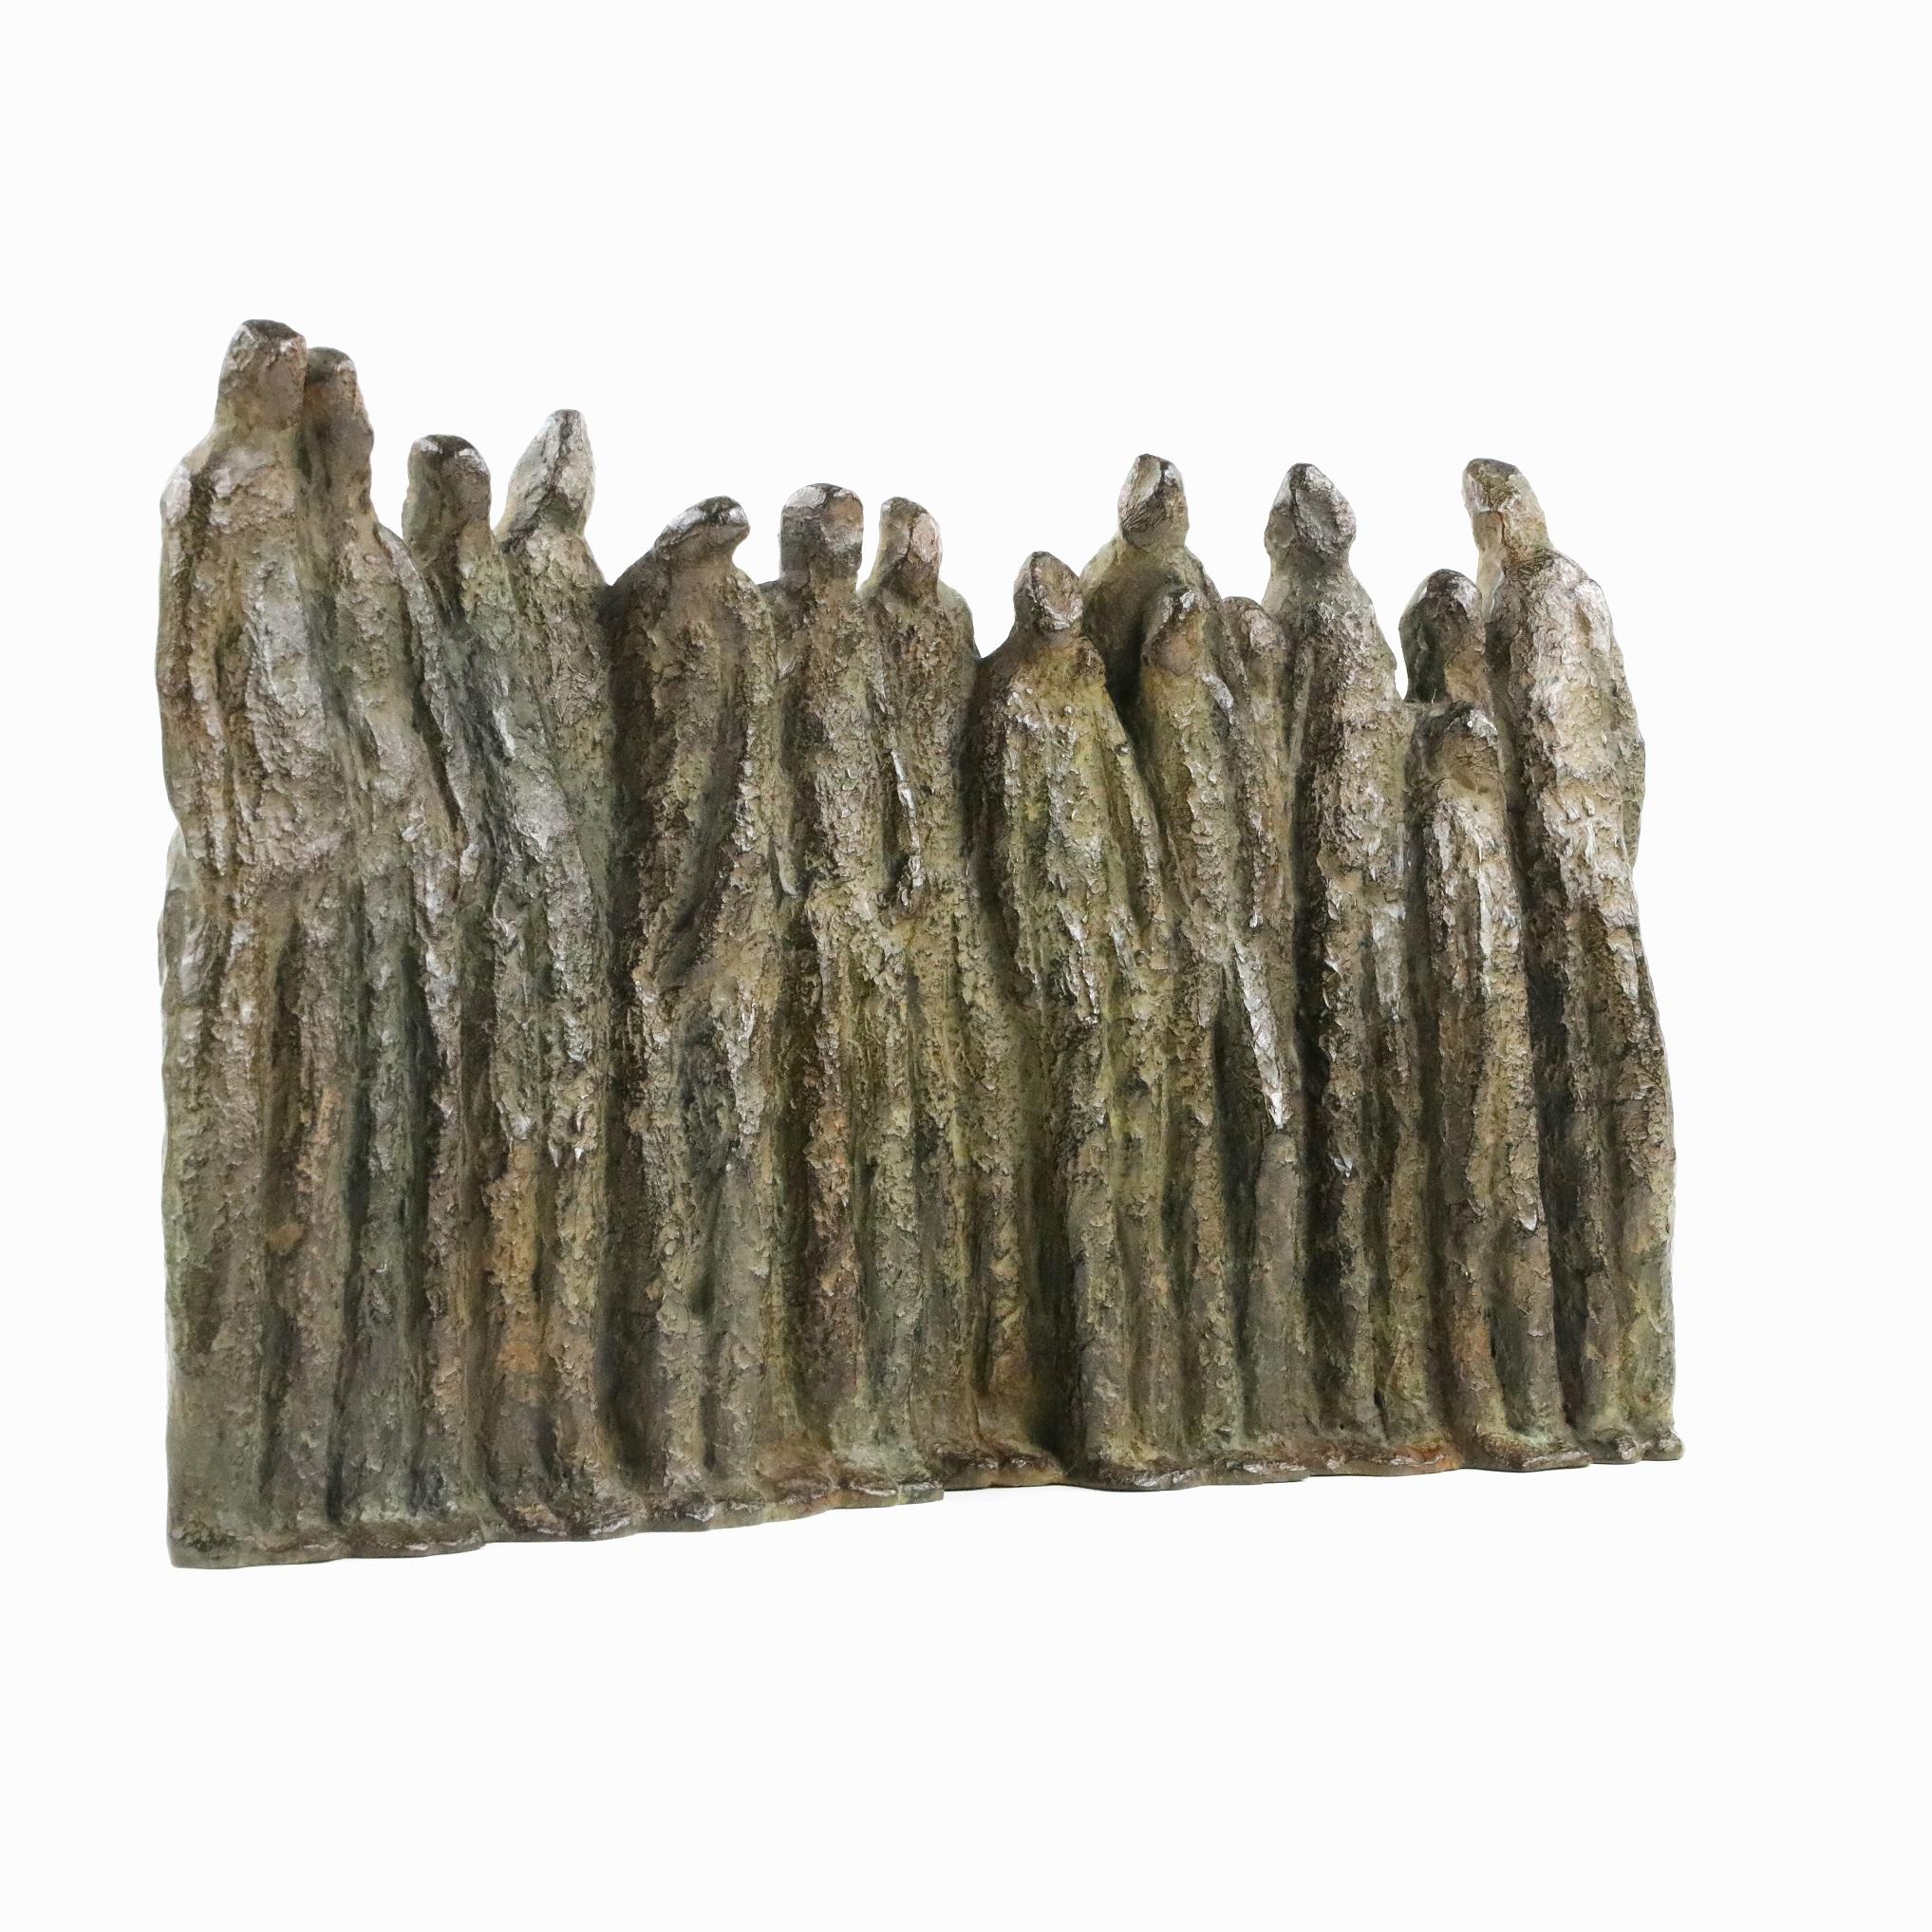 Group II by Delphine Brabant - contemporary bronze sculpture, human figures 2